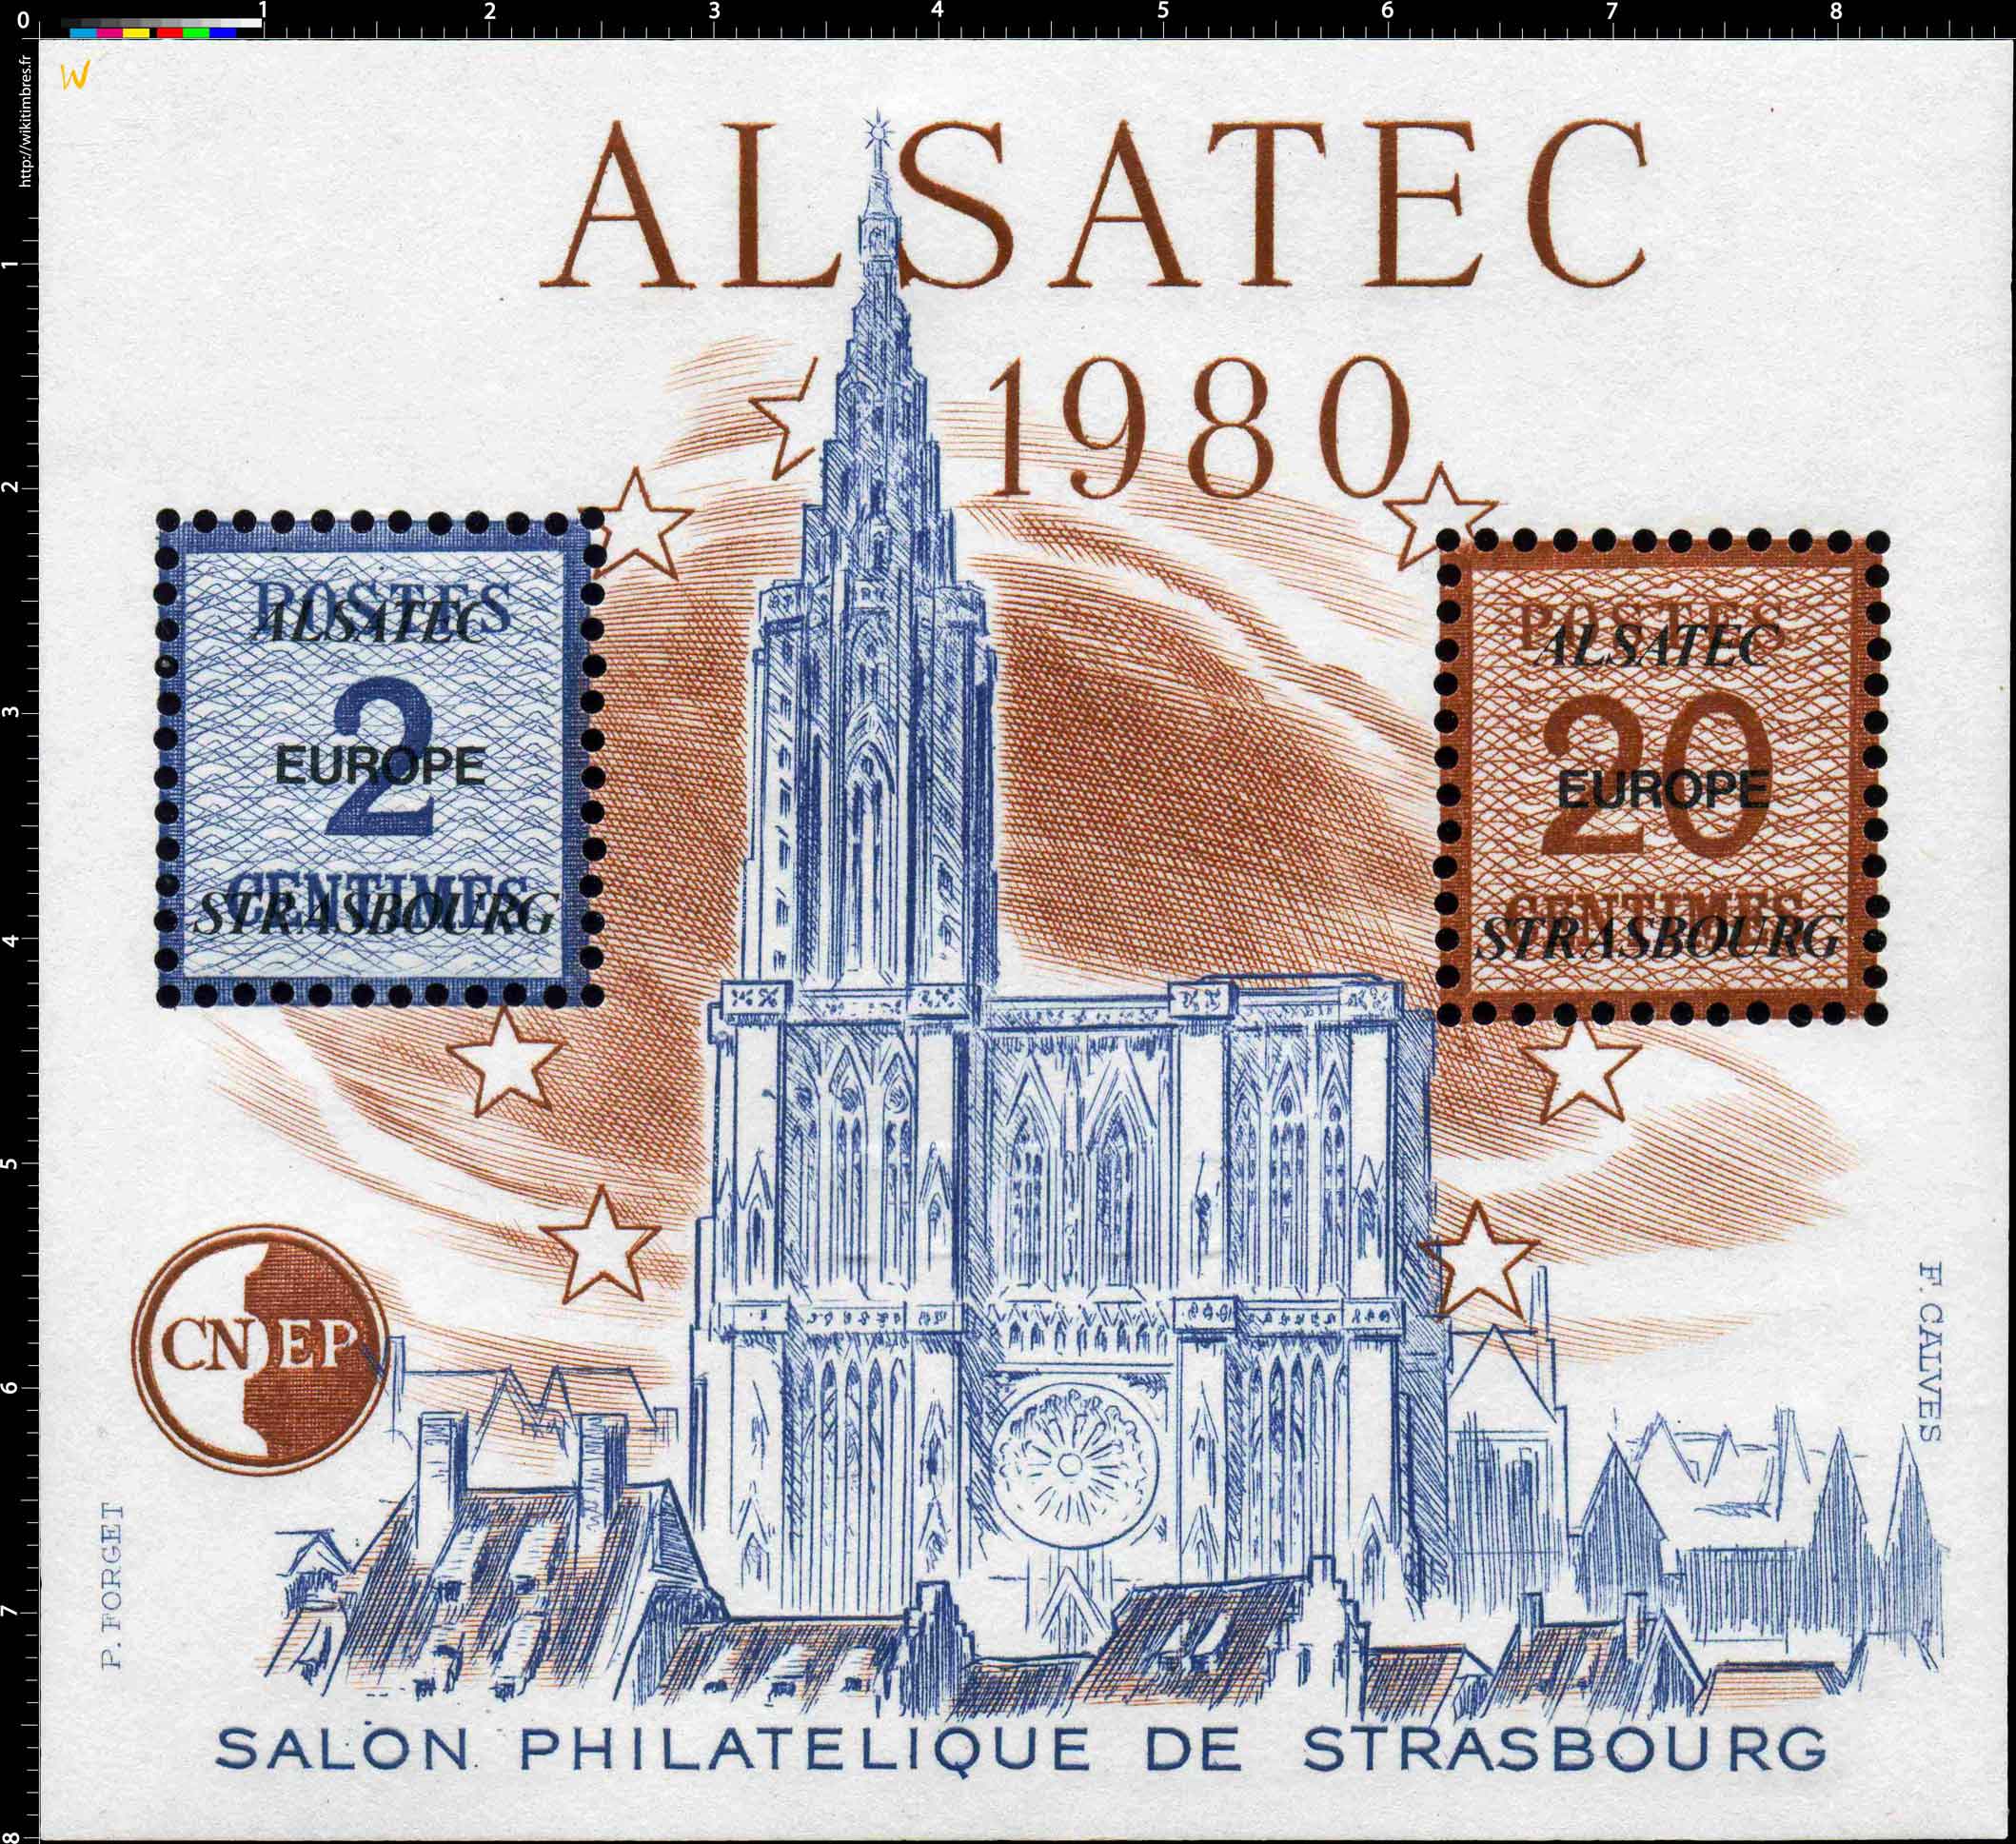 1980 Alsatec Salon philatélique de Strasbourg CNEP